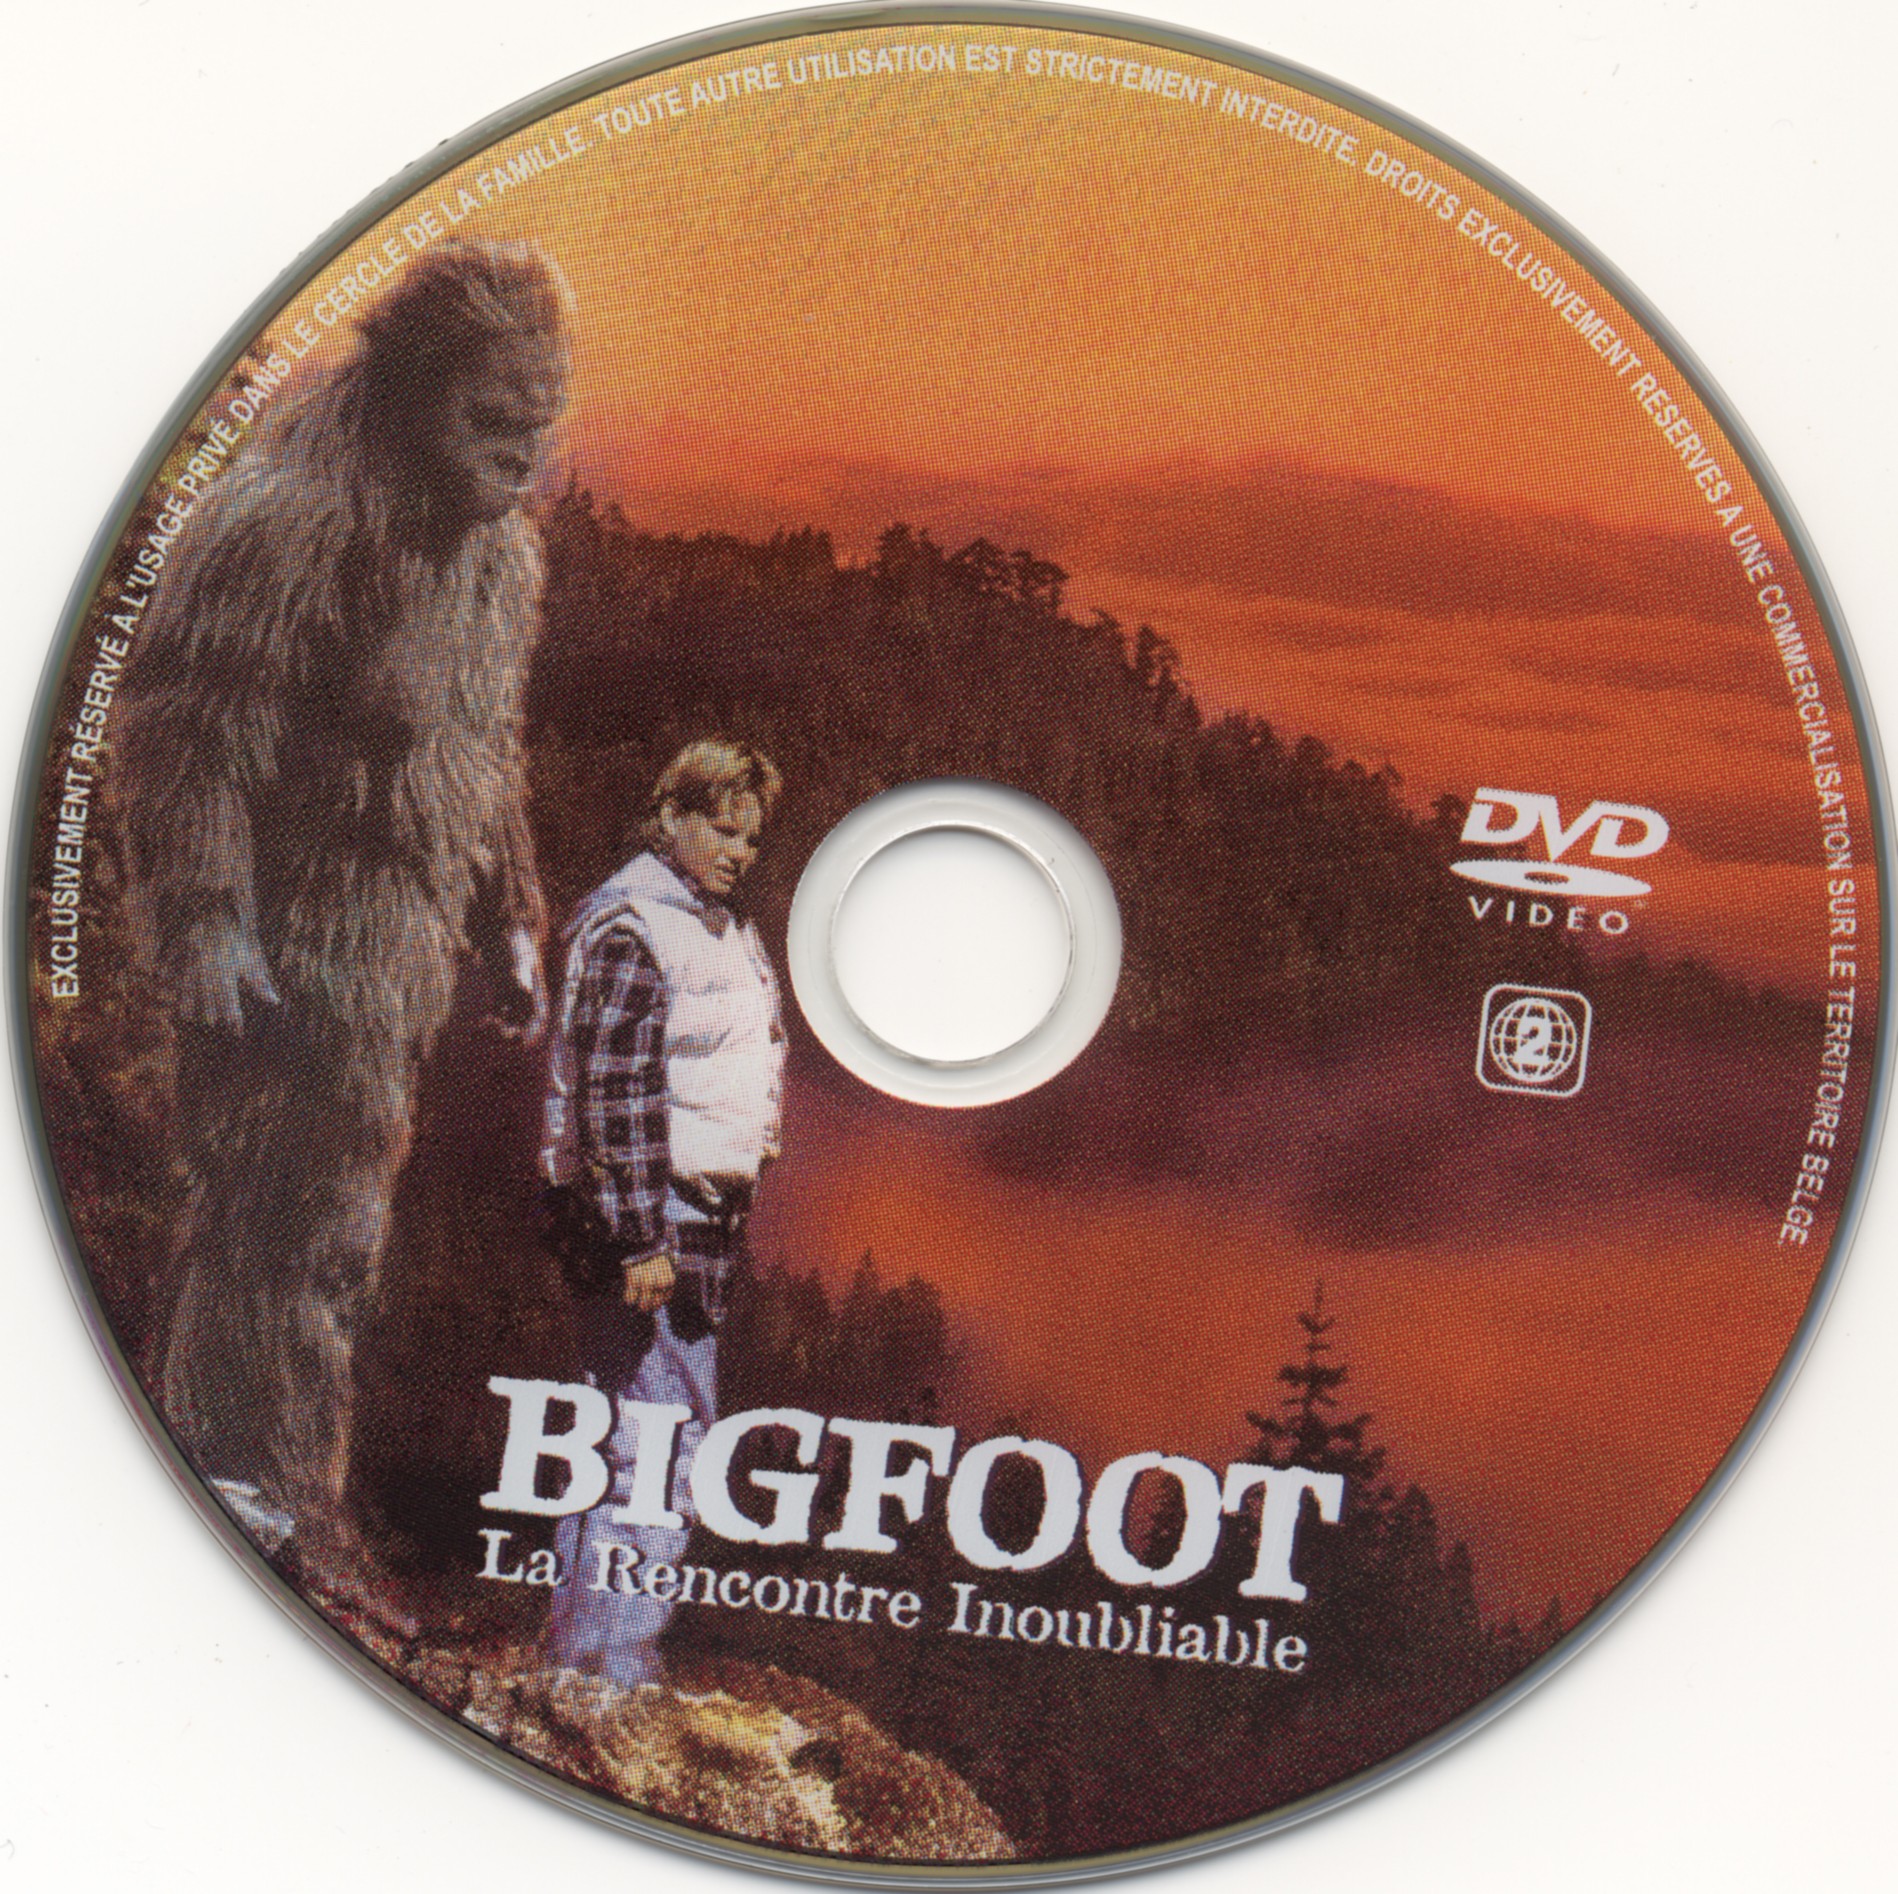 Bigfoot La rencontre inoubliable